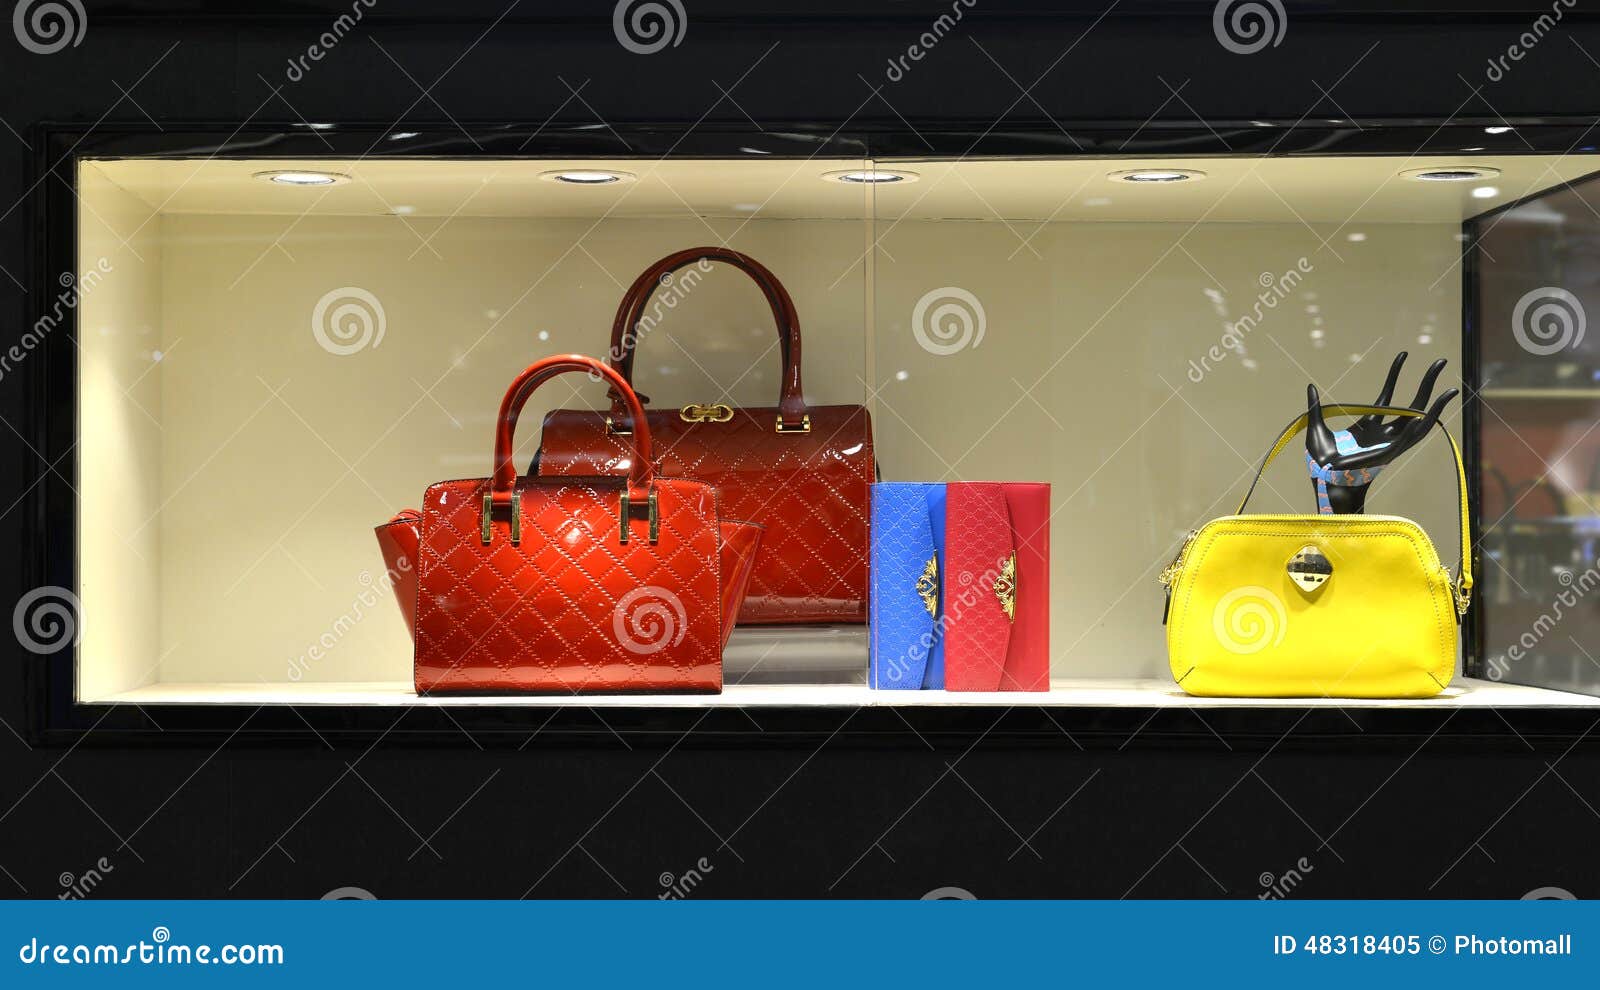 leather handbag showcase, shop window